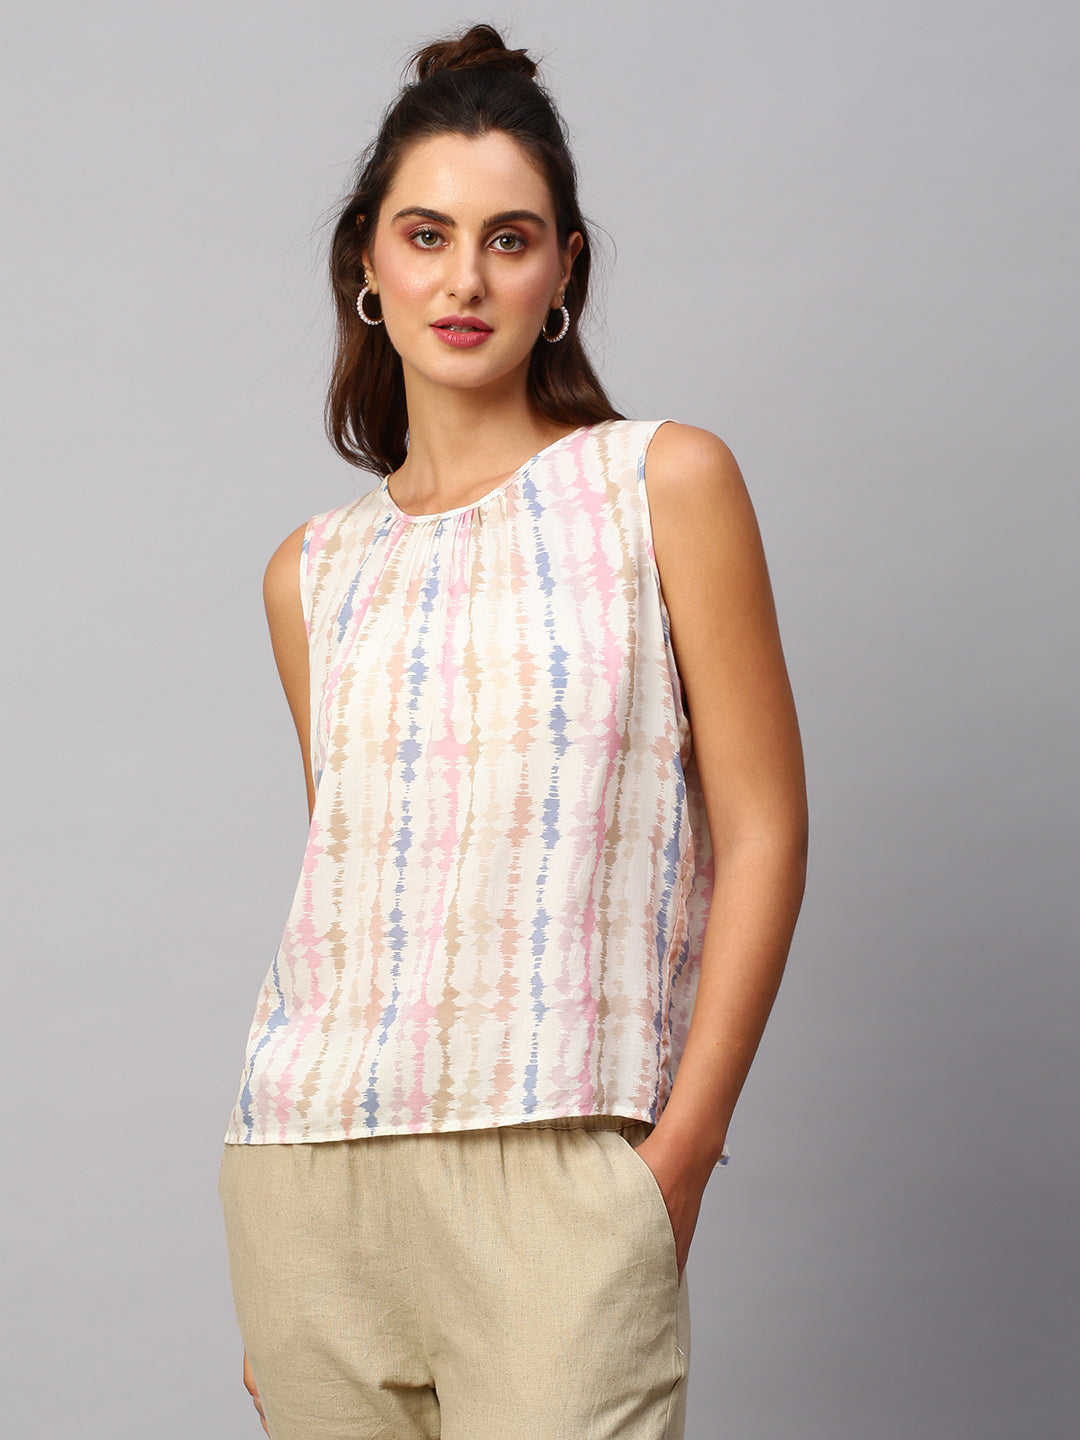 Buy beautiful yellow cotton linen shirt designs in India | Priya Chaudhary